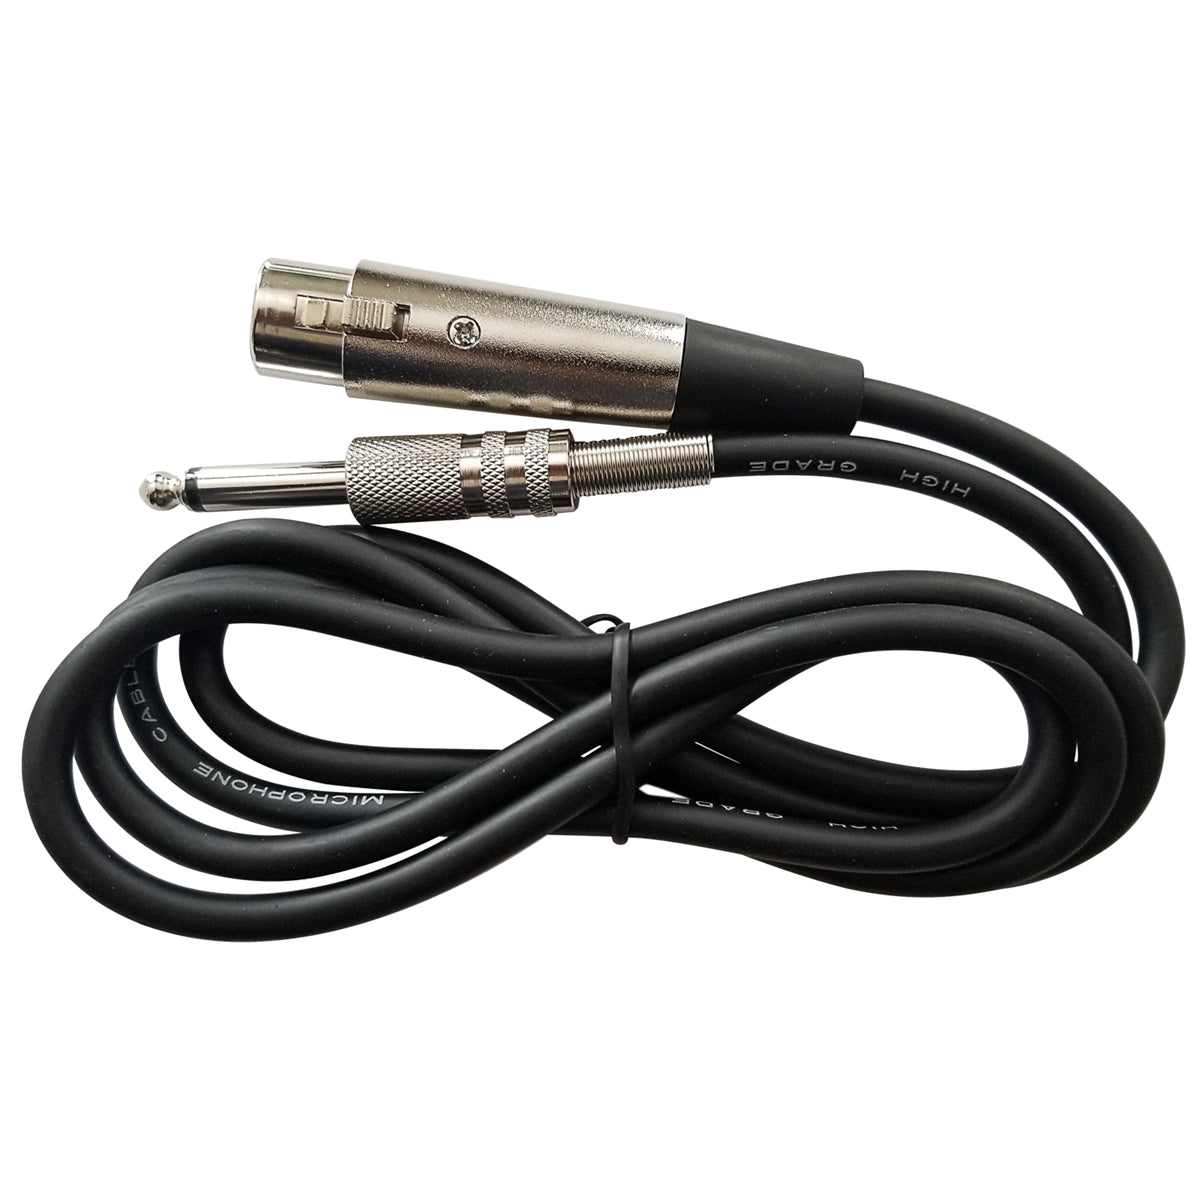 AxcessAbles MC-20 Dynamic Mic Bundle - Live/Studio/Recording/Podcasting - Desktop Boom Arm, Pop Filter & 10' XLR Cable